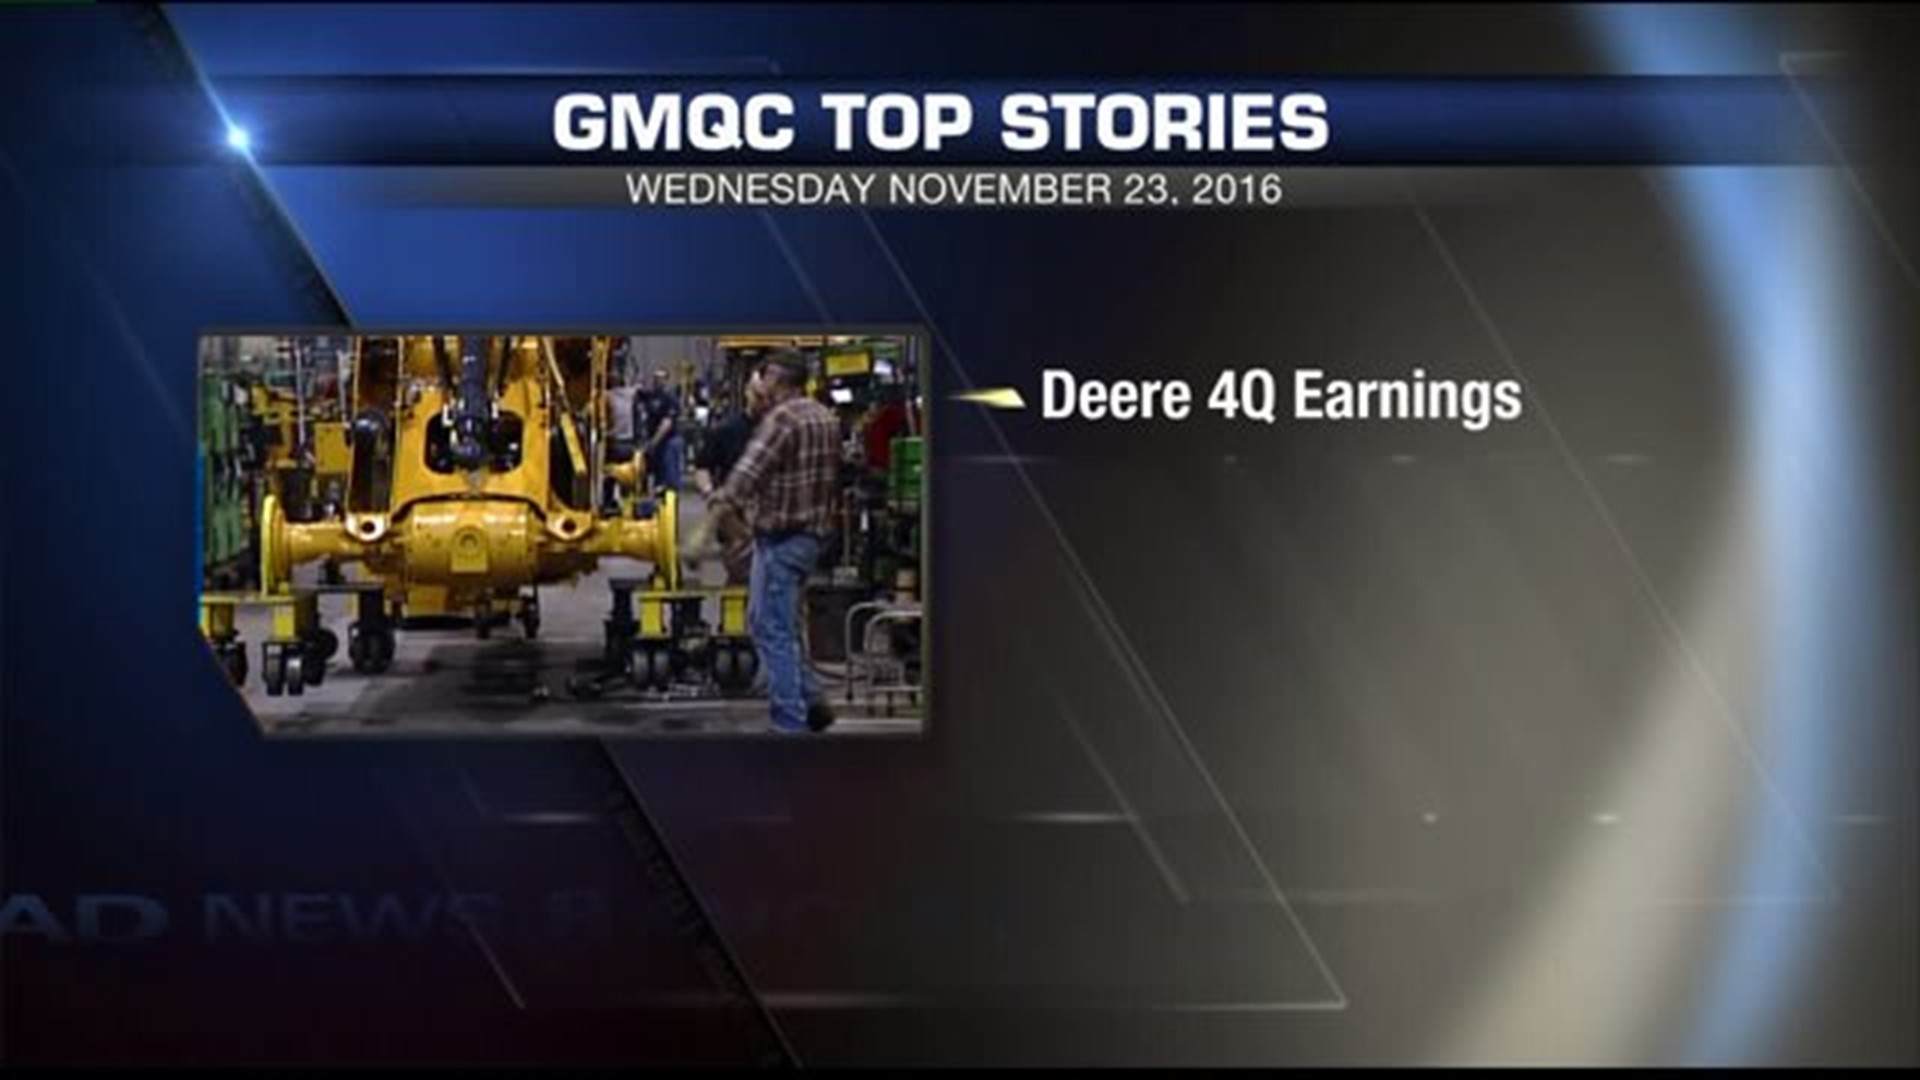 Deere 4th Quarter Earnings Drop